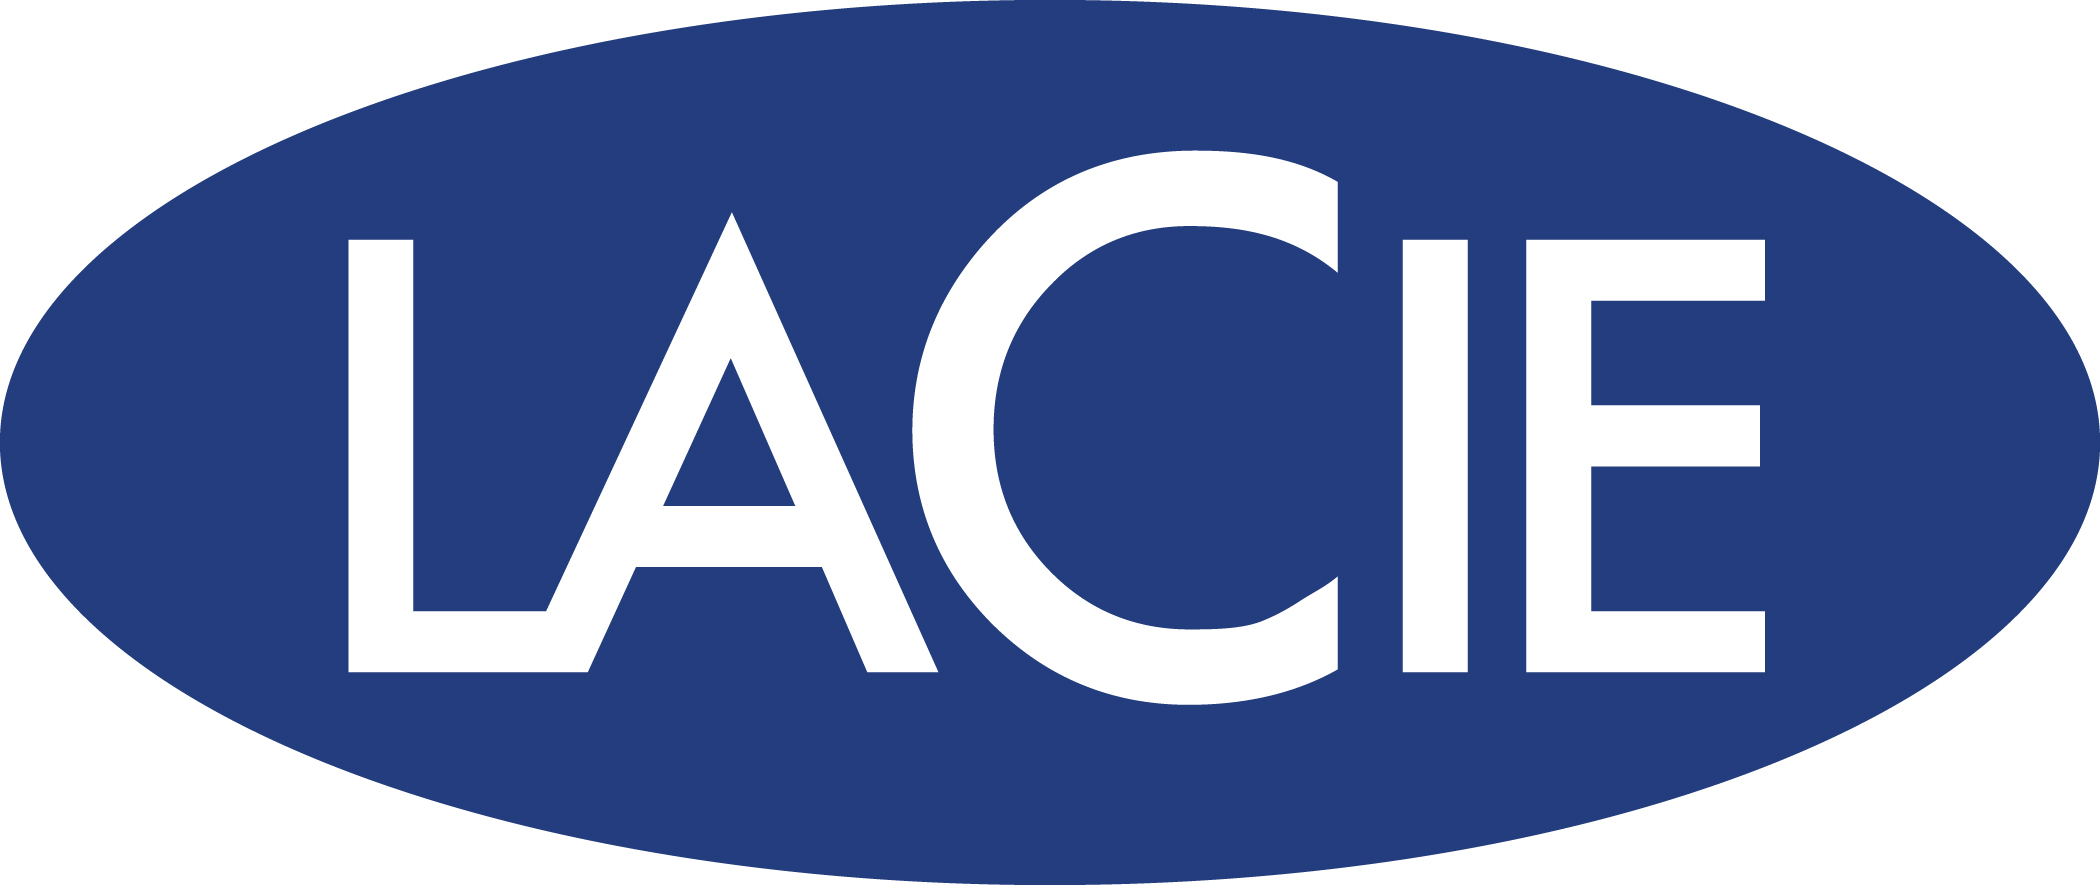 LaCie logo blue